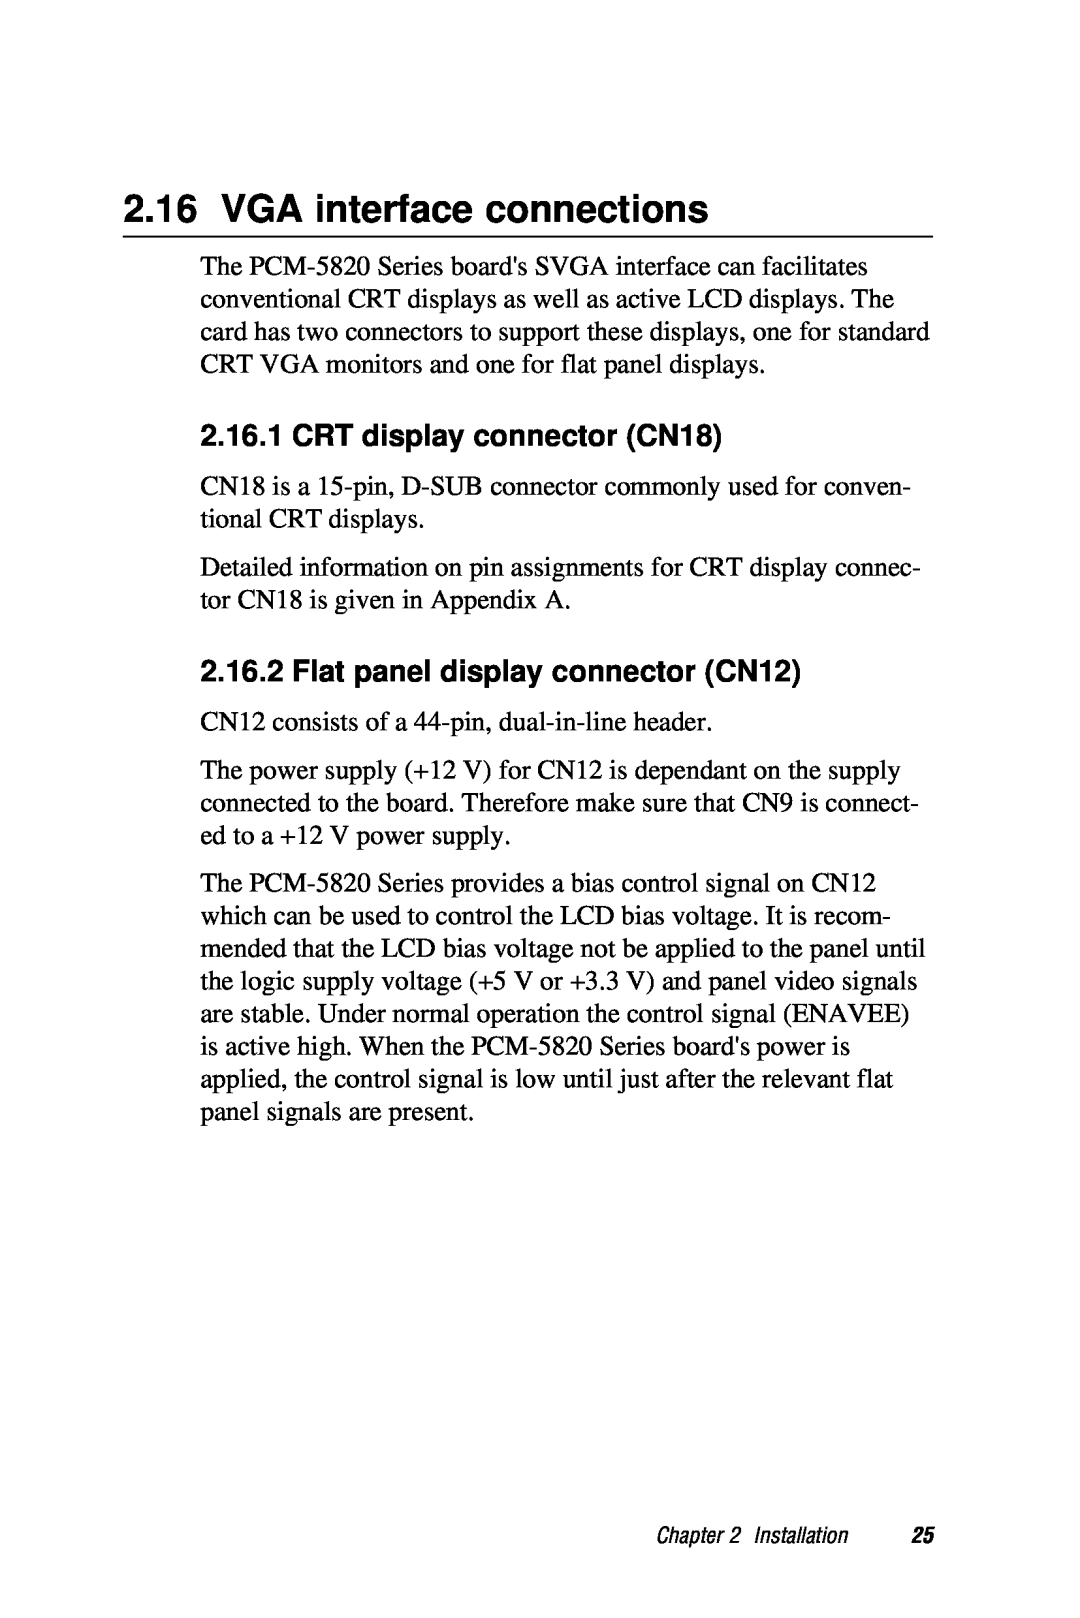 AMD PCM-5820 manual VGA interface connections, CRT display connector CN18, Flat panel display connector CN12 